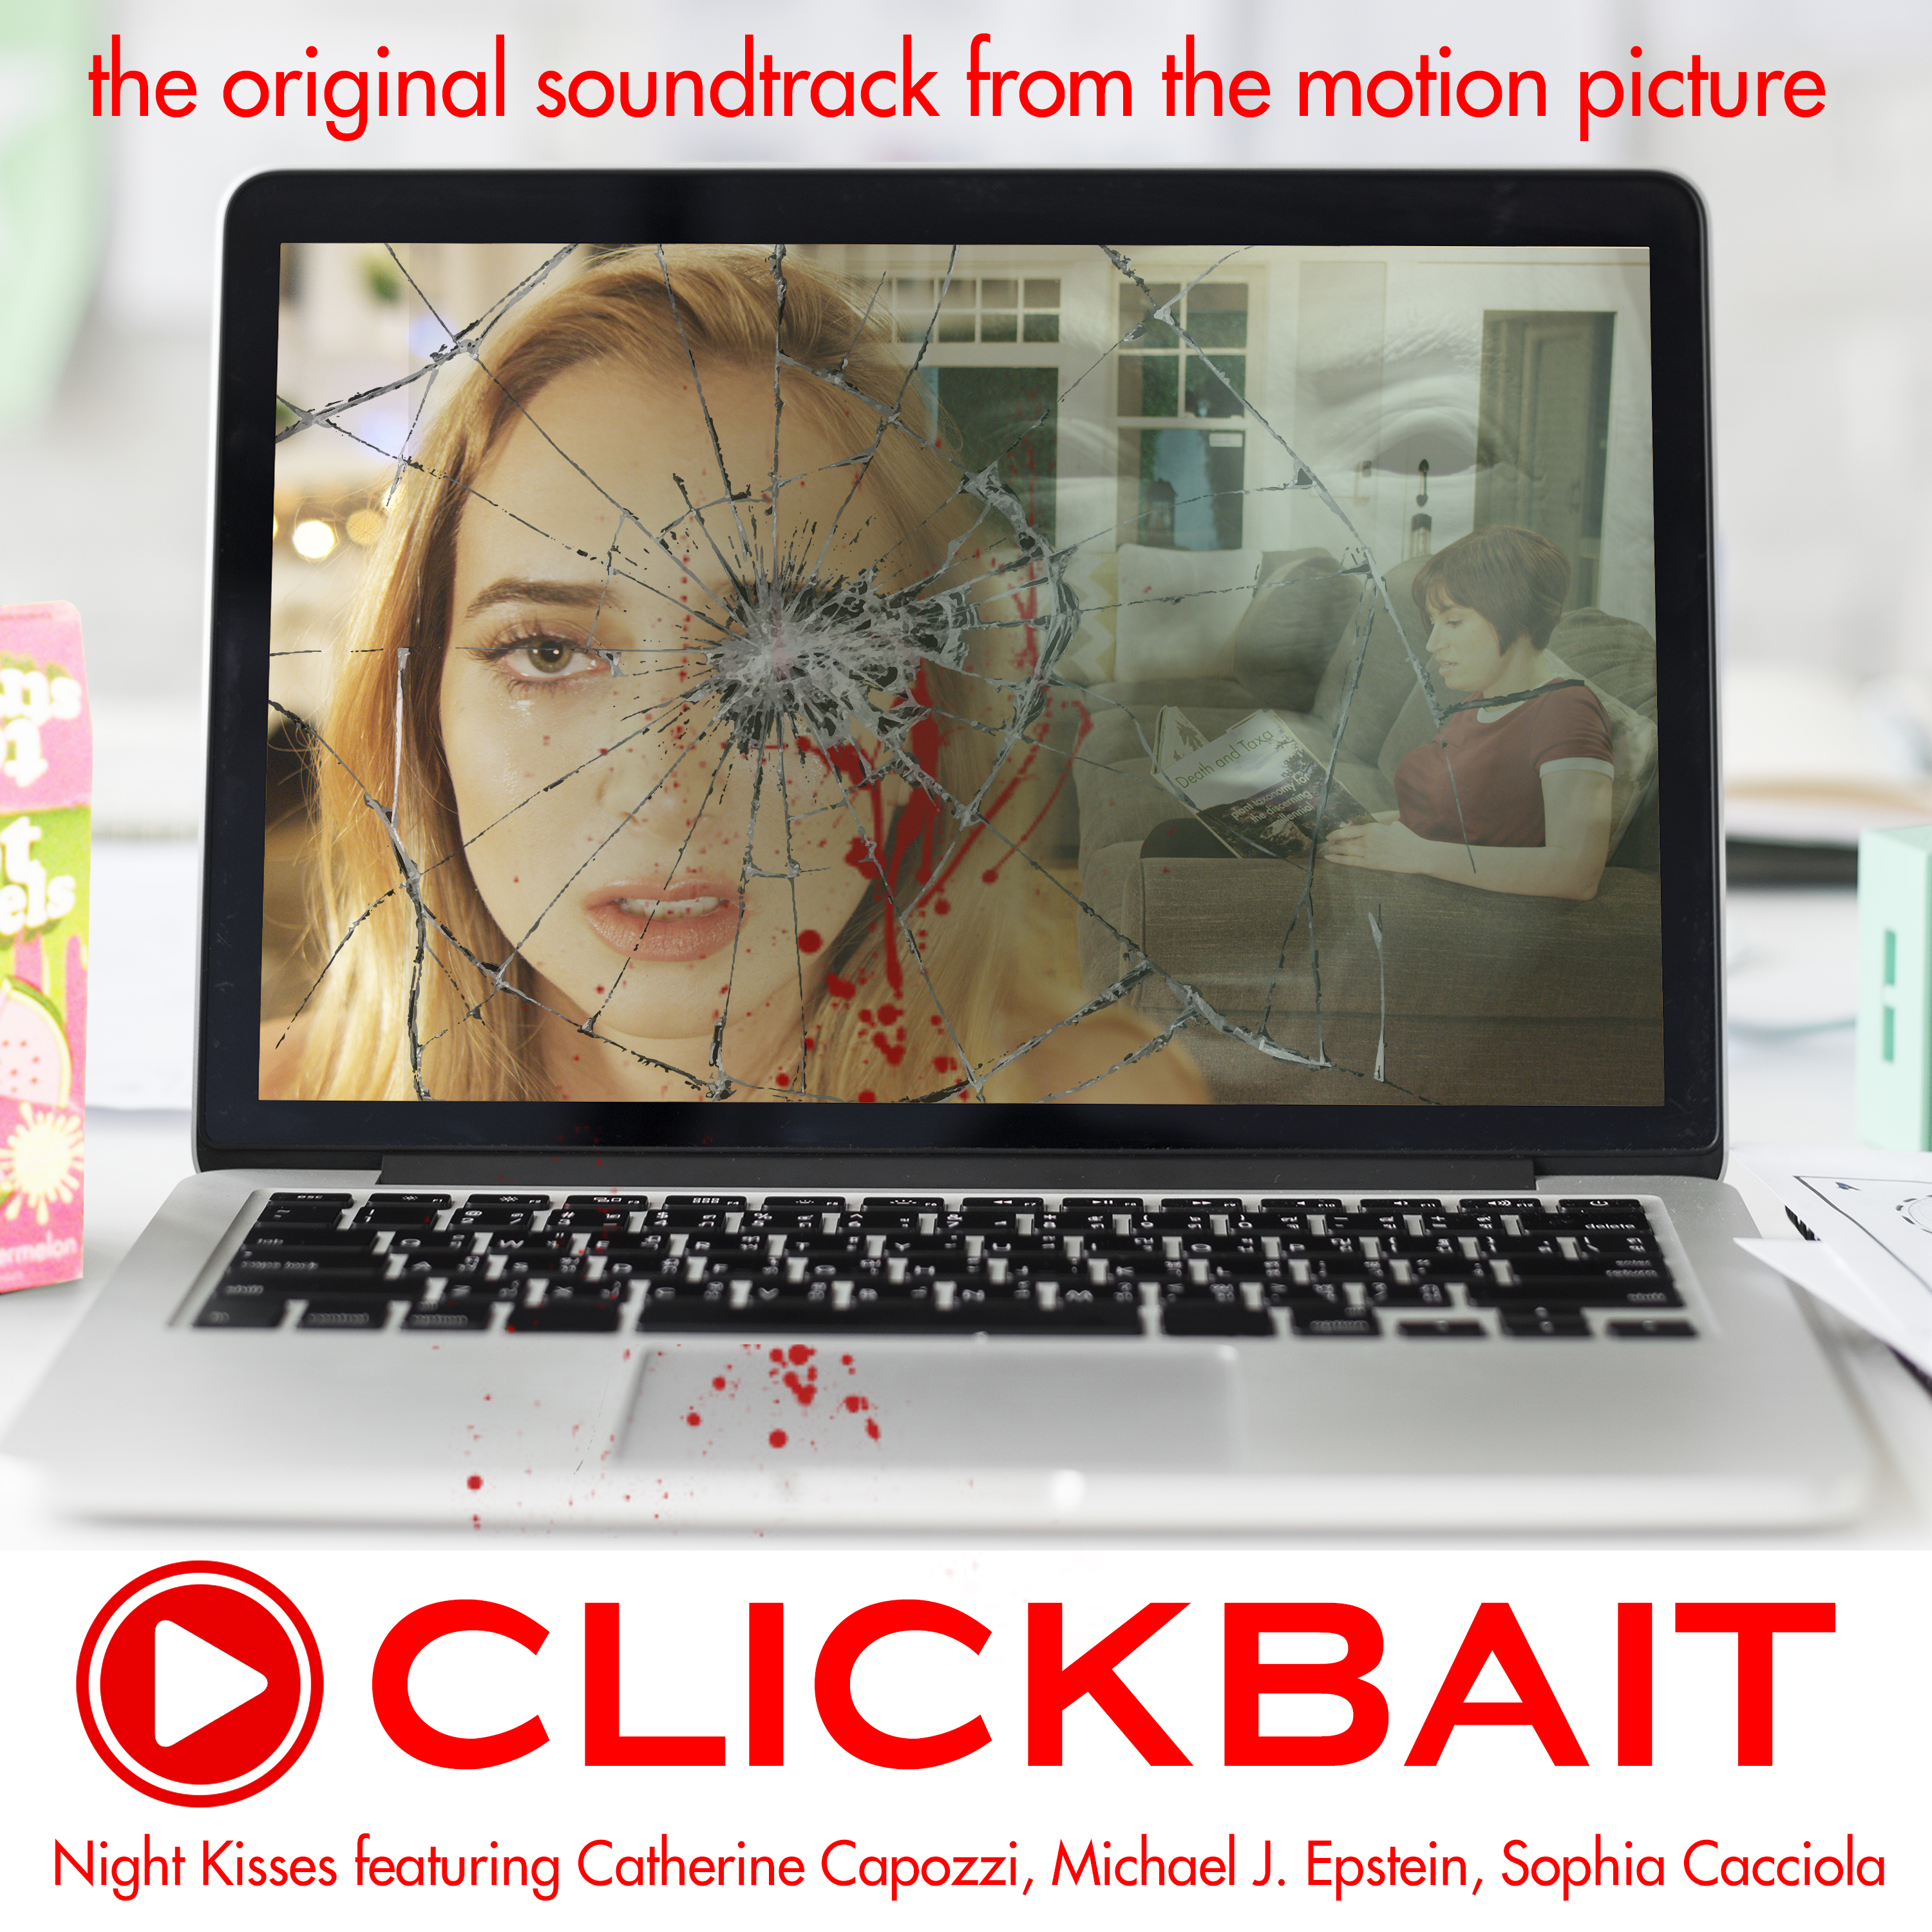 Clickbait Soundtrack Score cover art Night Kisses featuring Catherine Capozzi, Michael J. Epstein, Sophia Cacciola